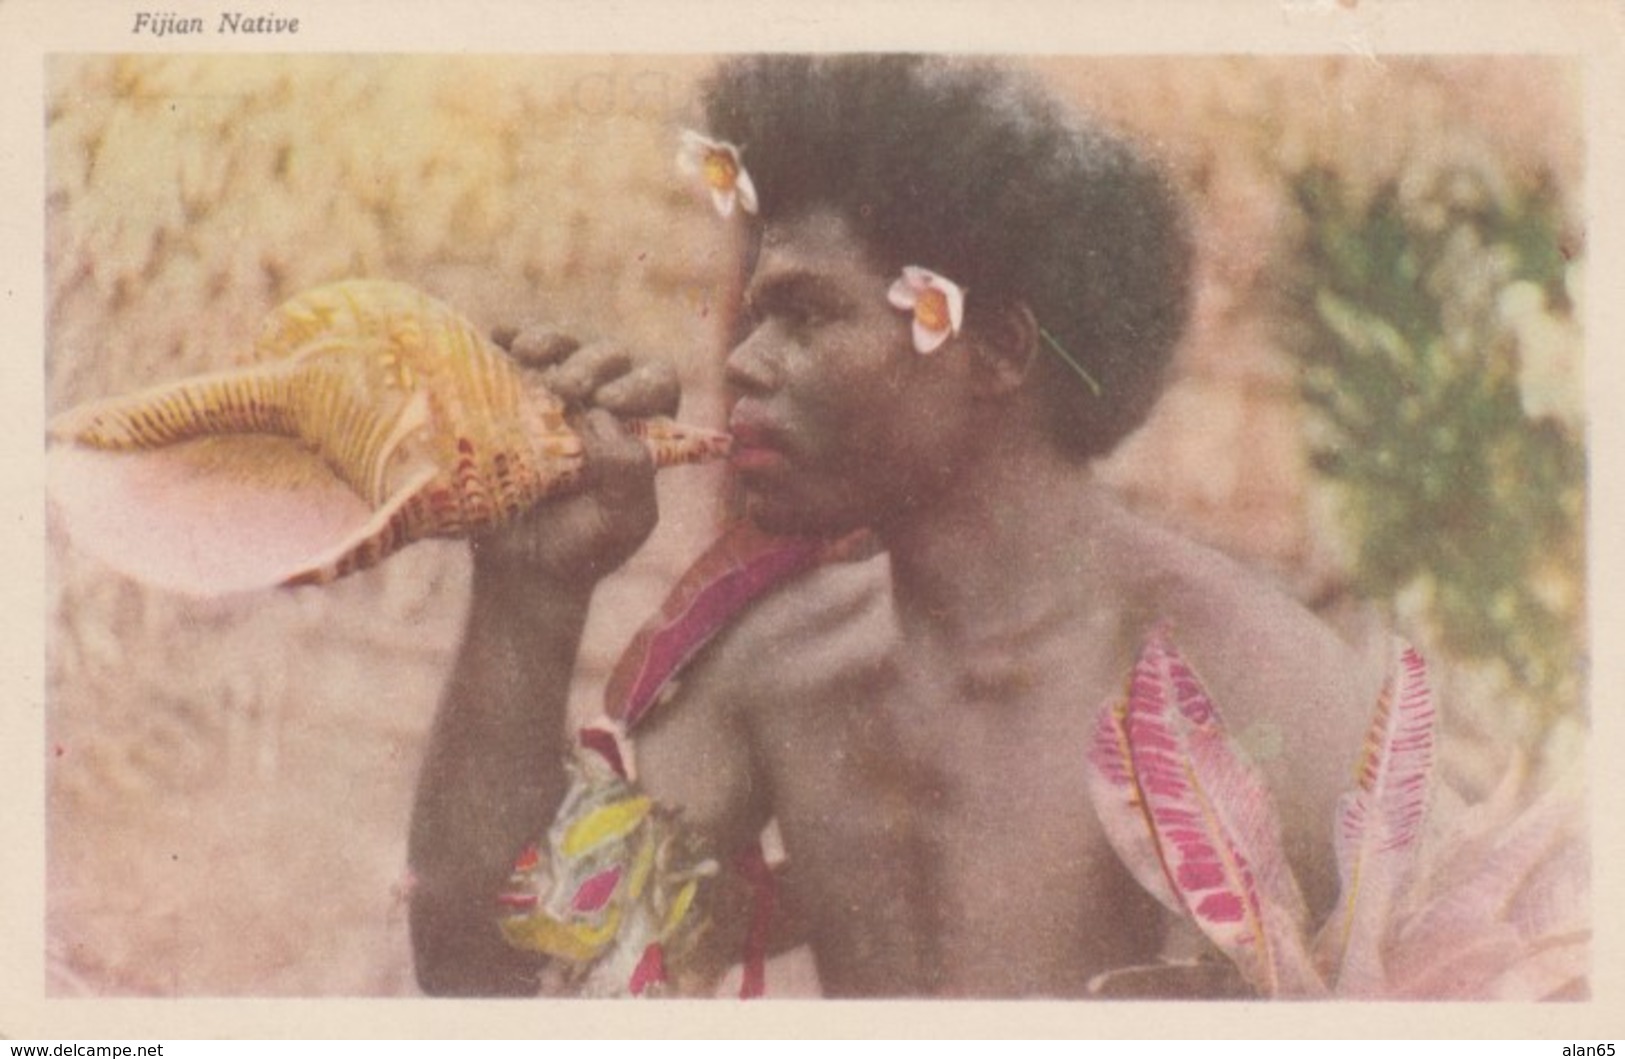 Fiji Native Man Blows Conch Shell, Flowers, South Seas Pacific Oceania, C1940s(?) Vintage Postcard - Fiji